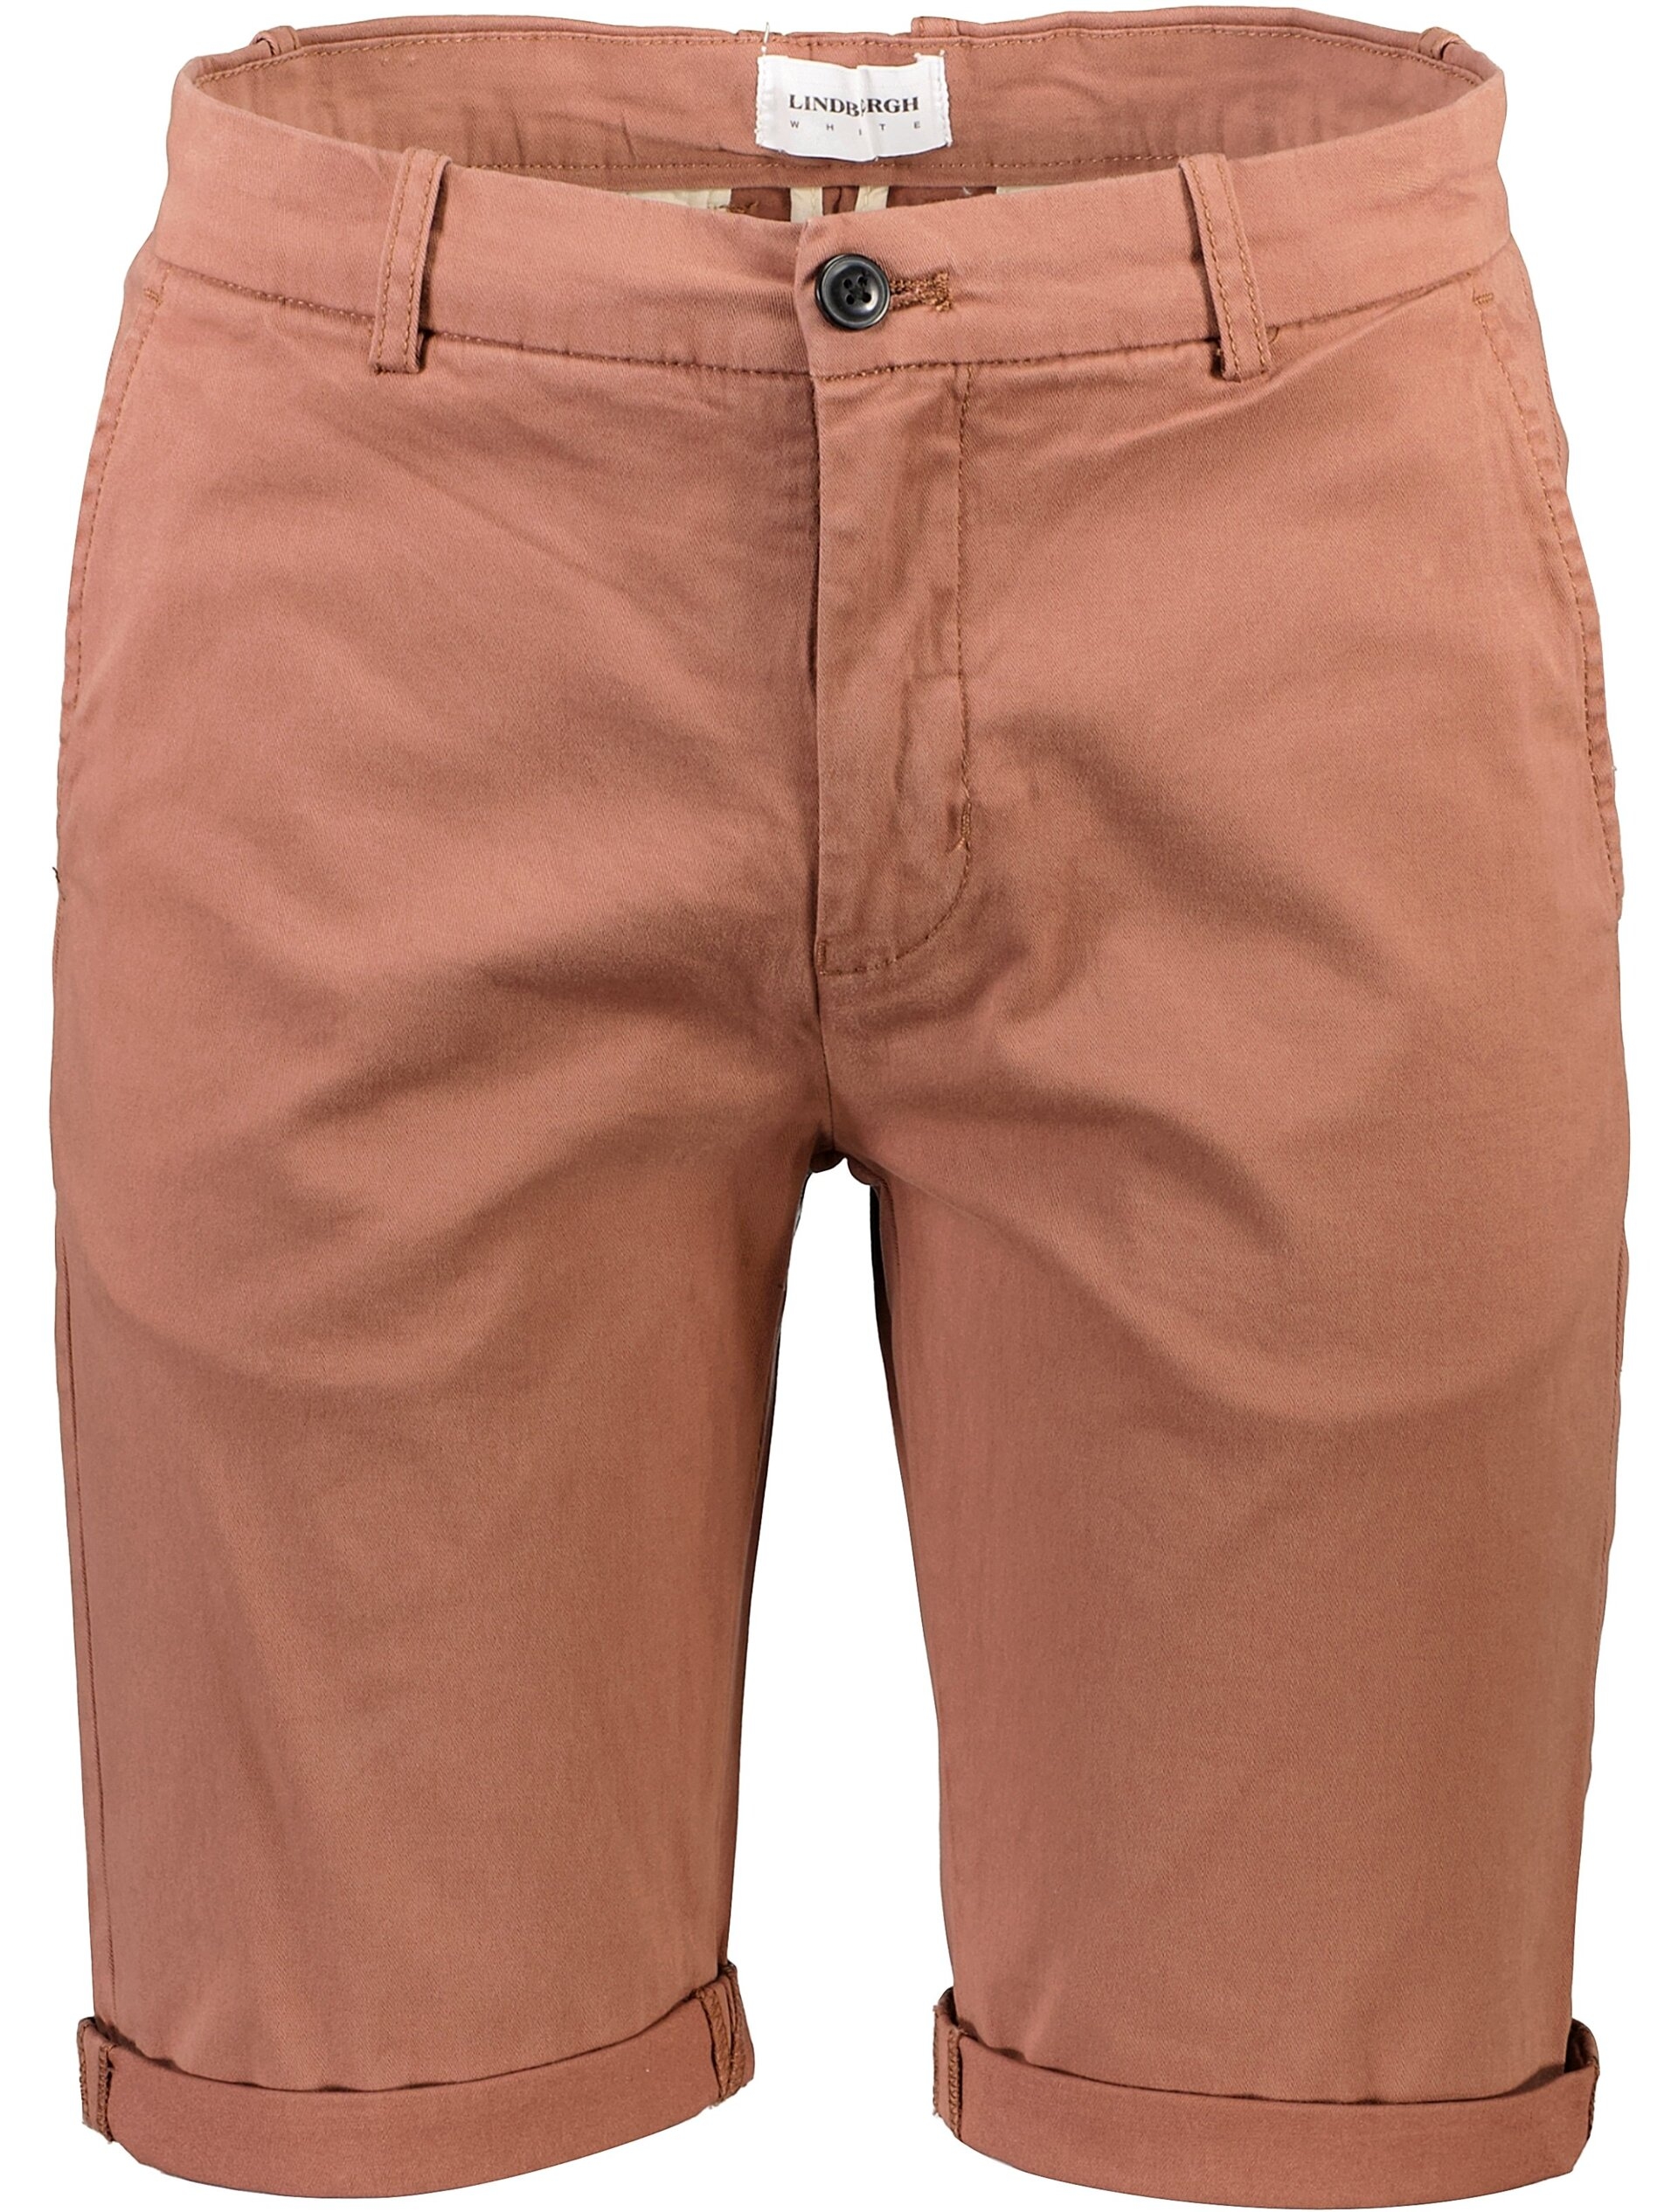 Lindbergh Chino shorts brown / burnt brown